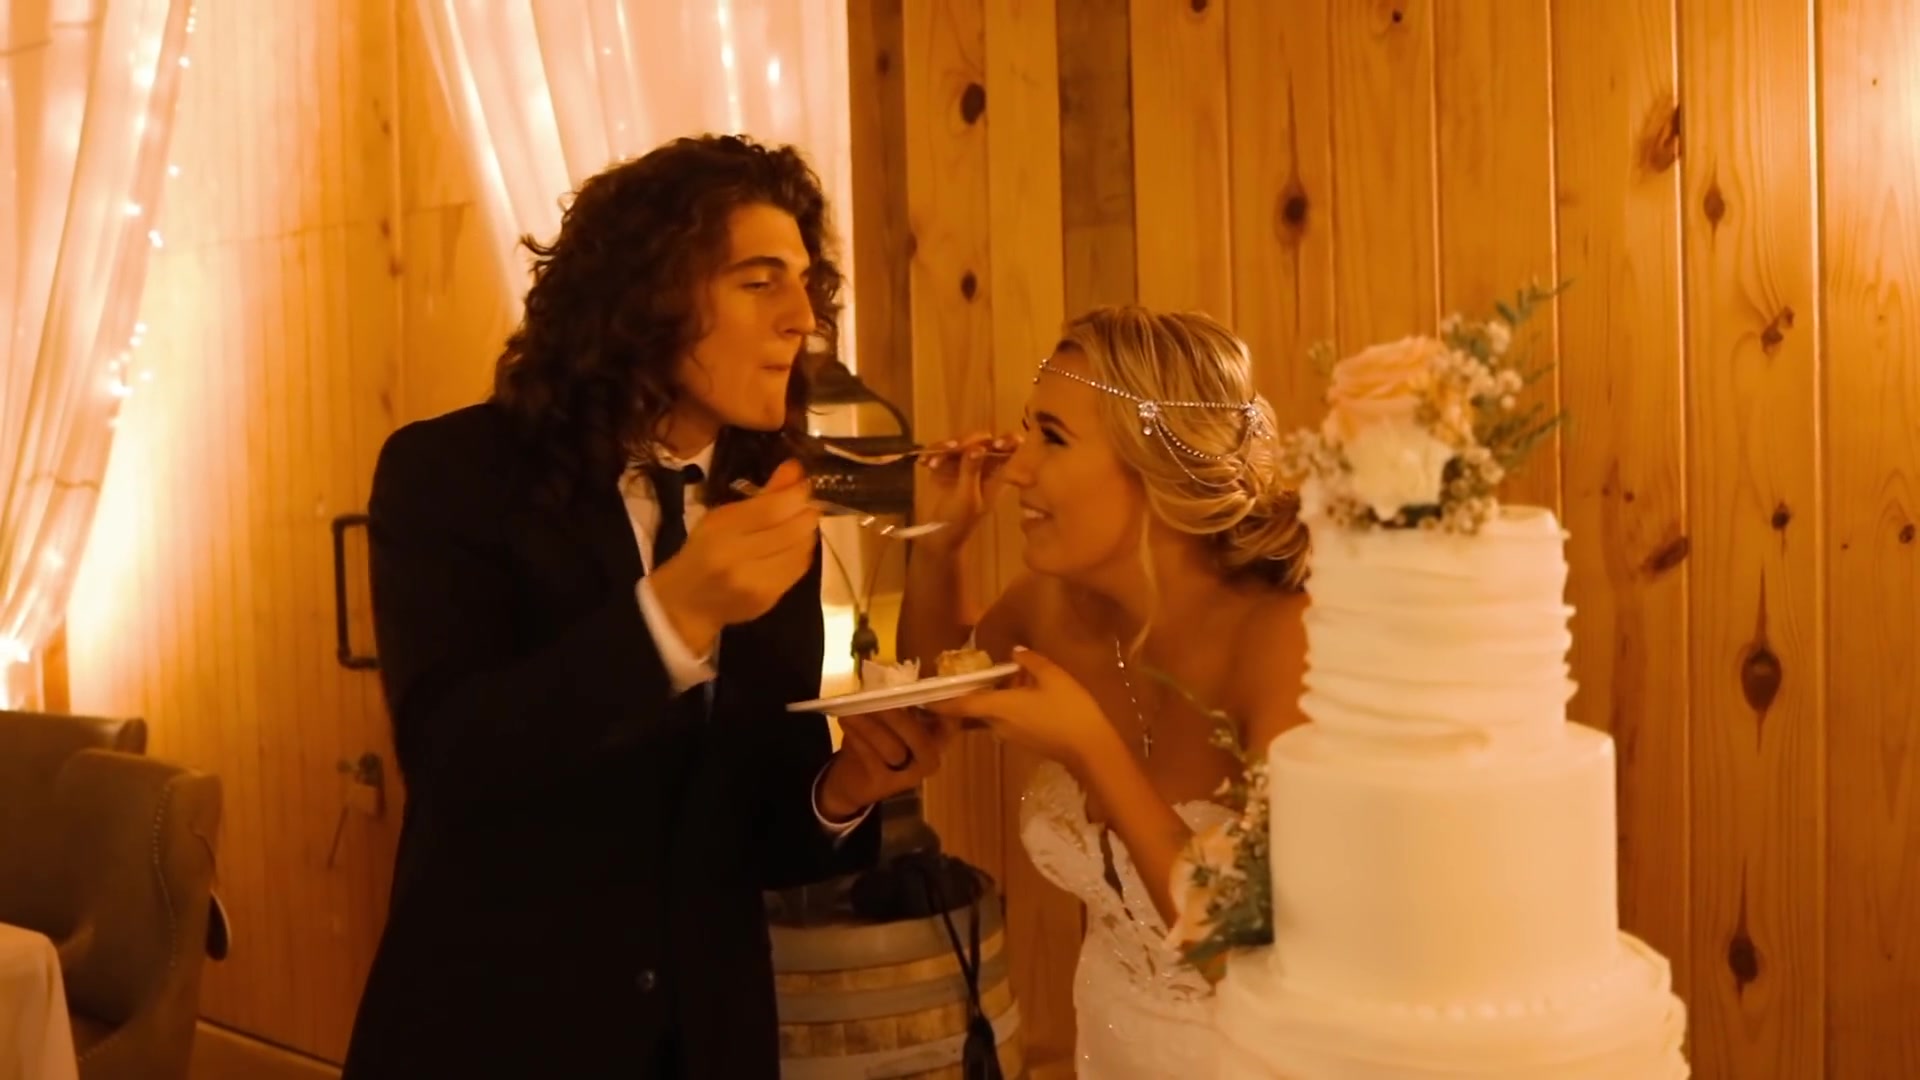 foehner-wedding-video-246.jpg